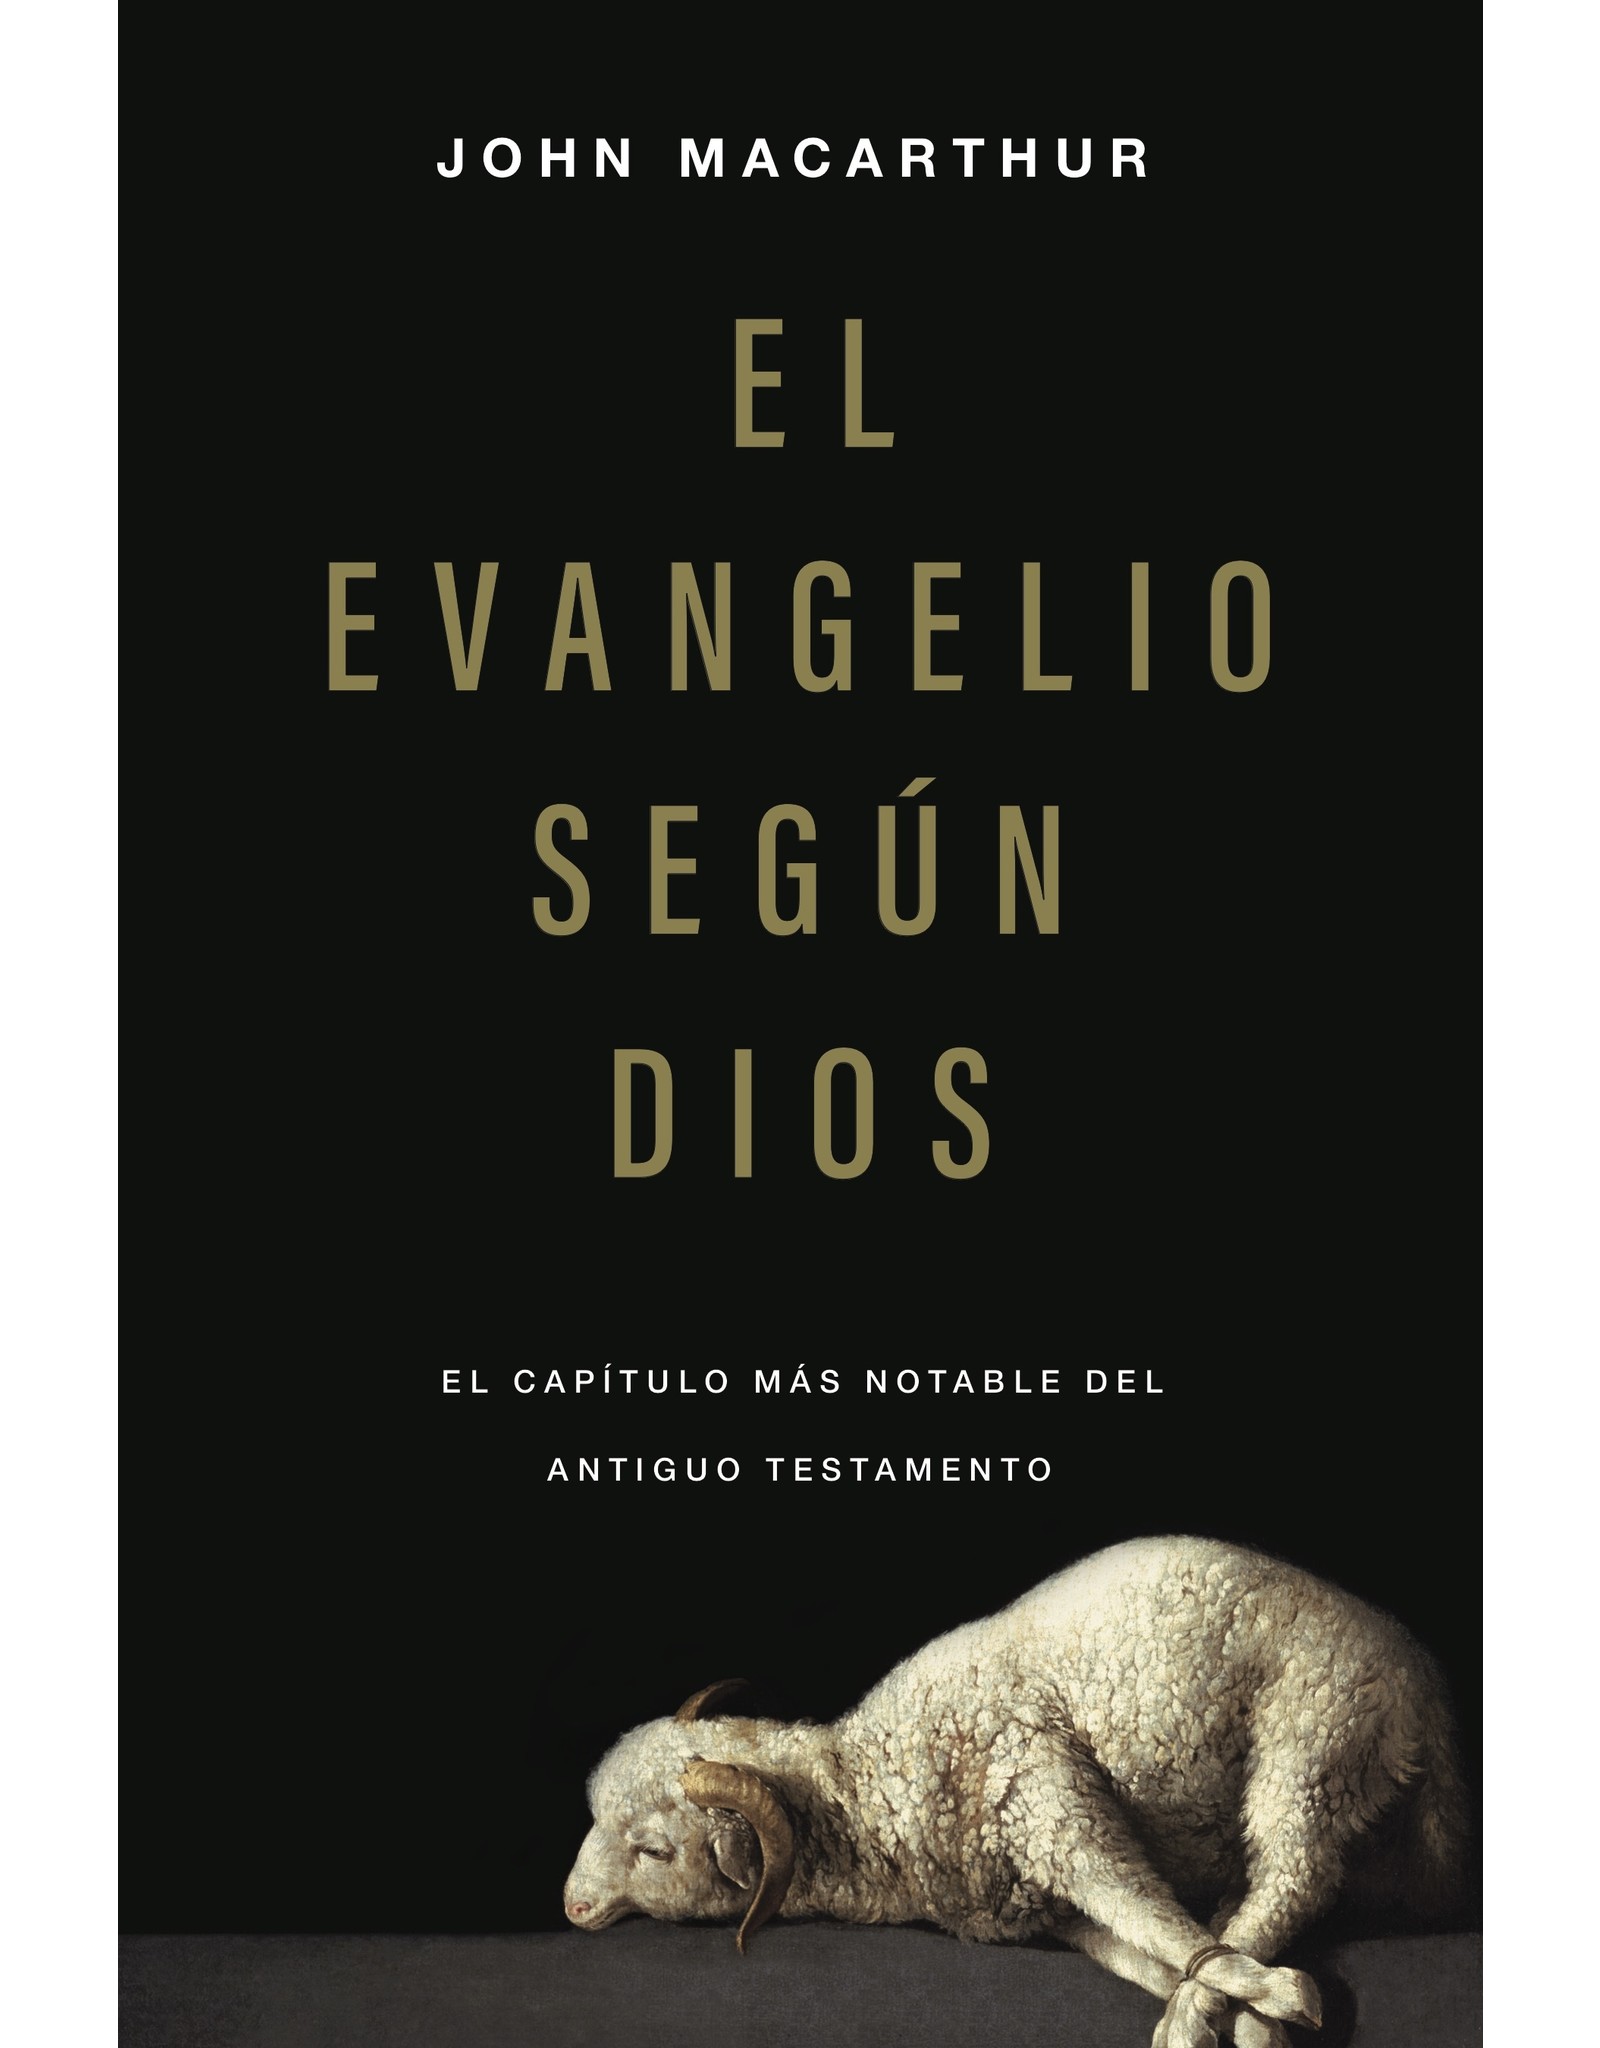 Kregel / Portavoz / Ingram SPAN -  El Evangelio según Dios (The Gospel According to God)